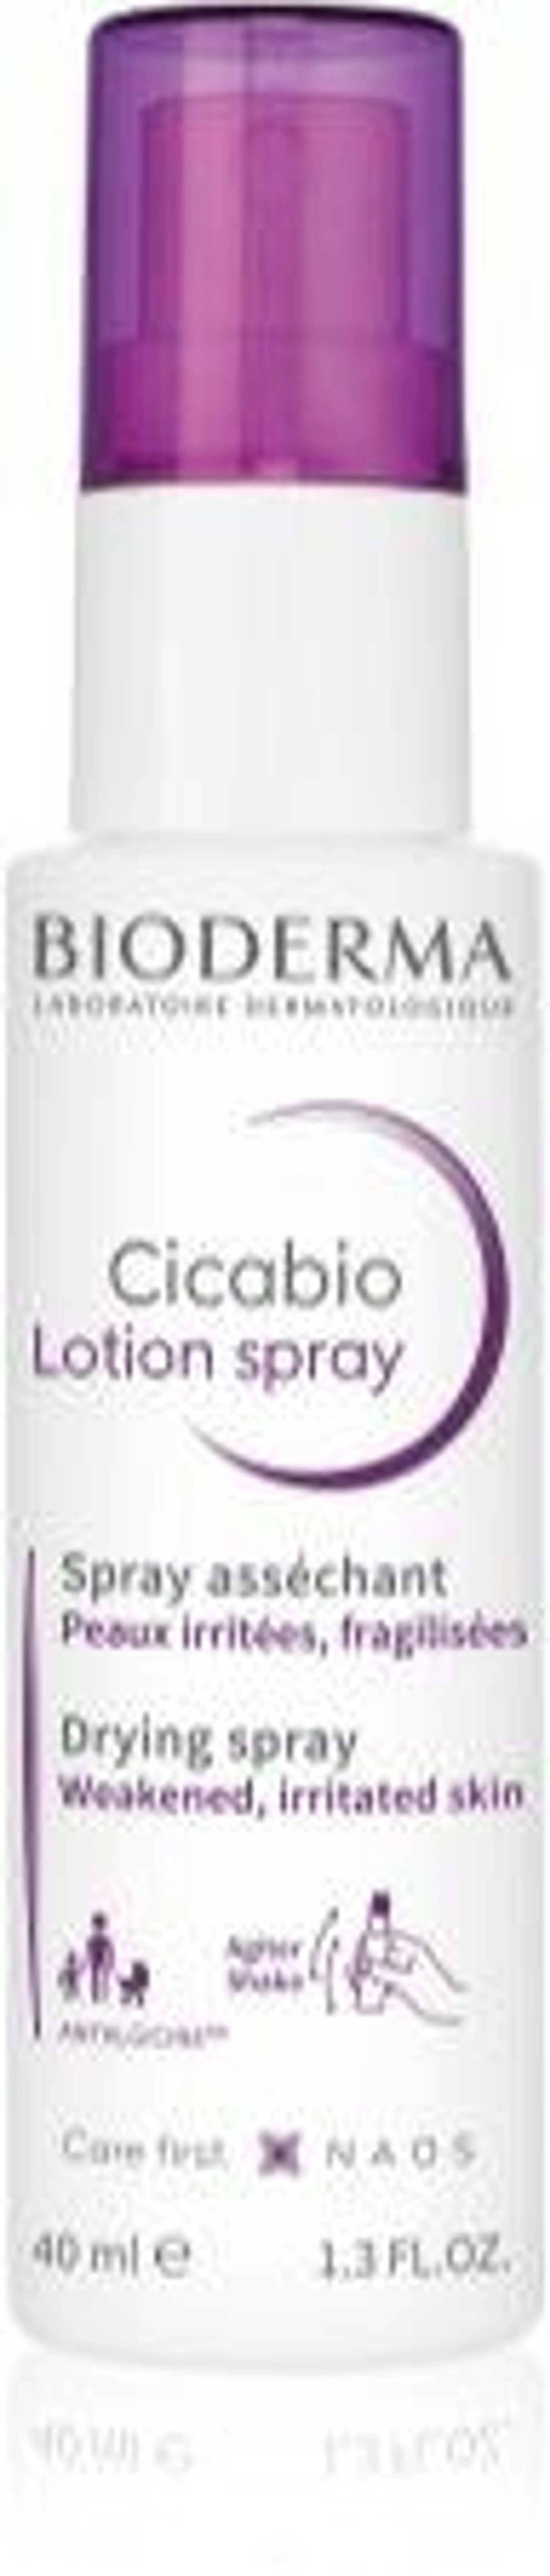 Cicabio Lotion Spray